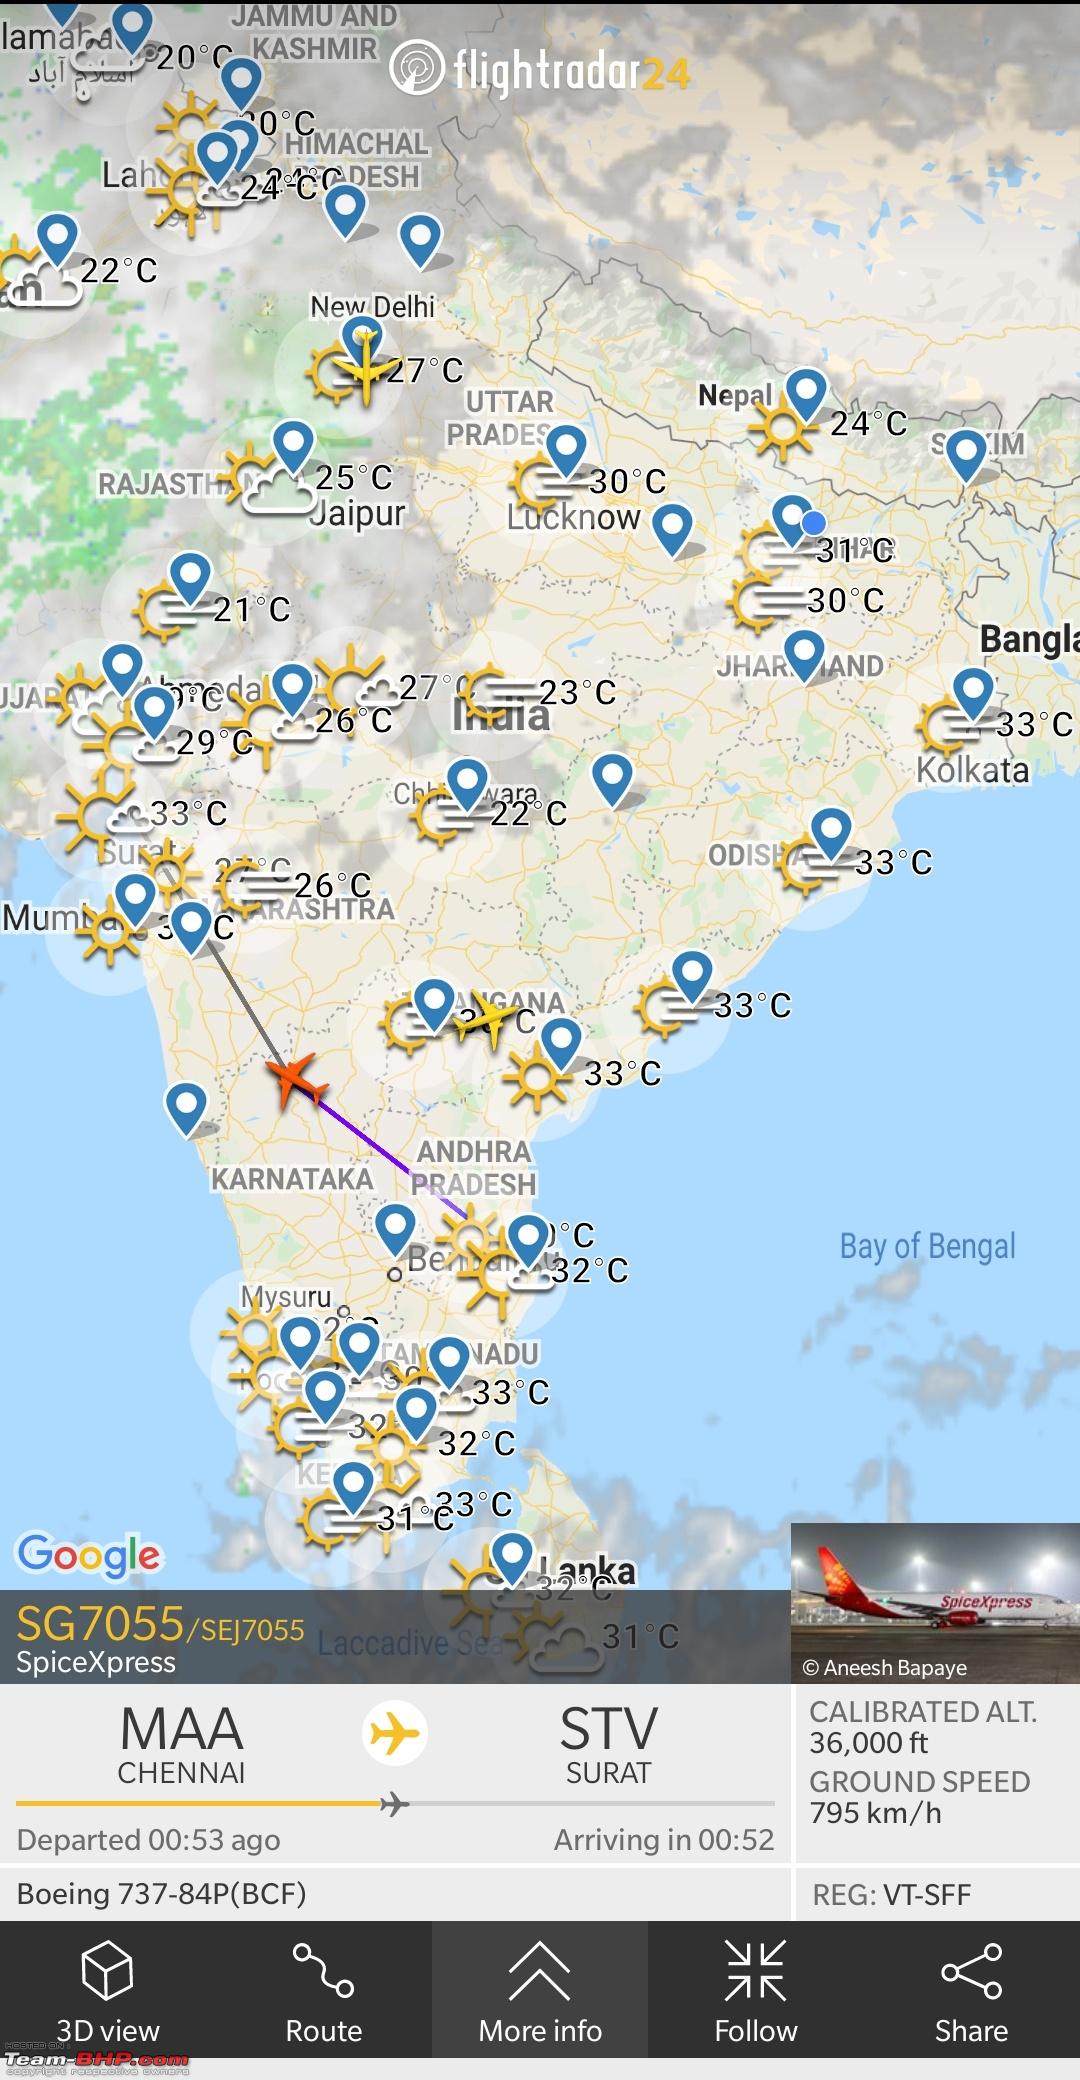 FlightRadar24 - Live Flight Tracker. My experience as a ...